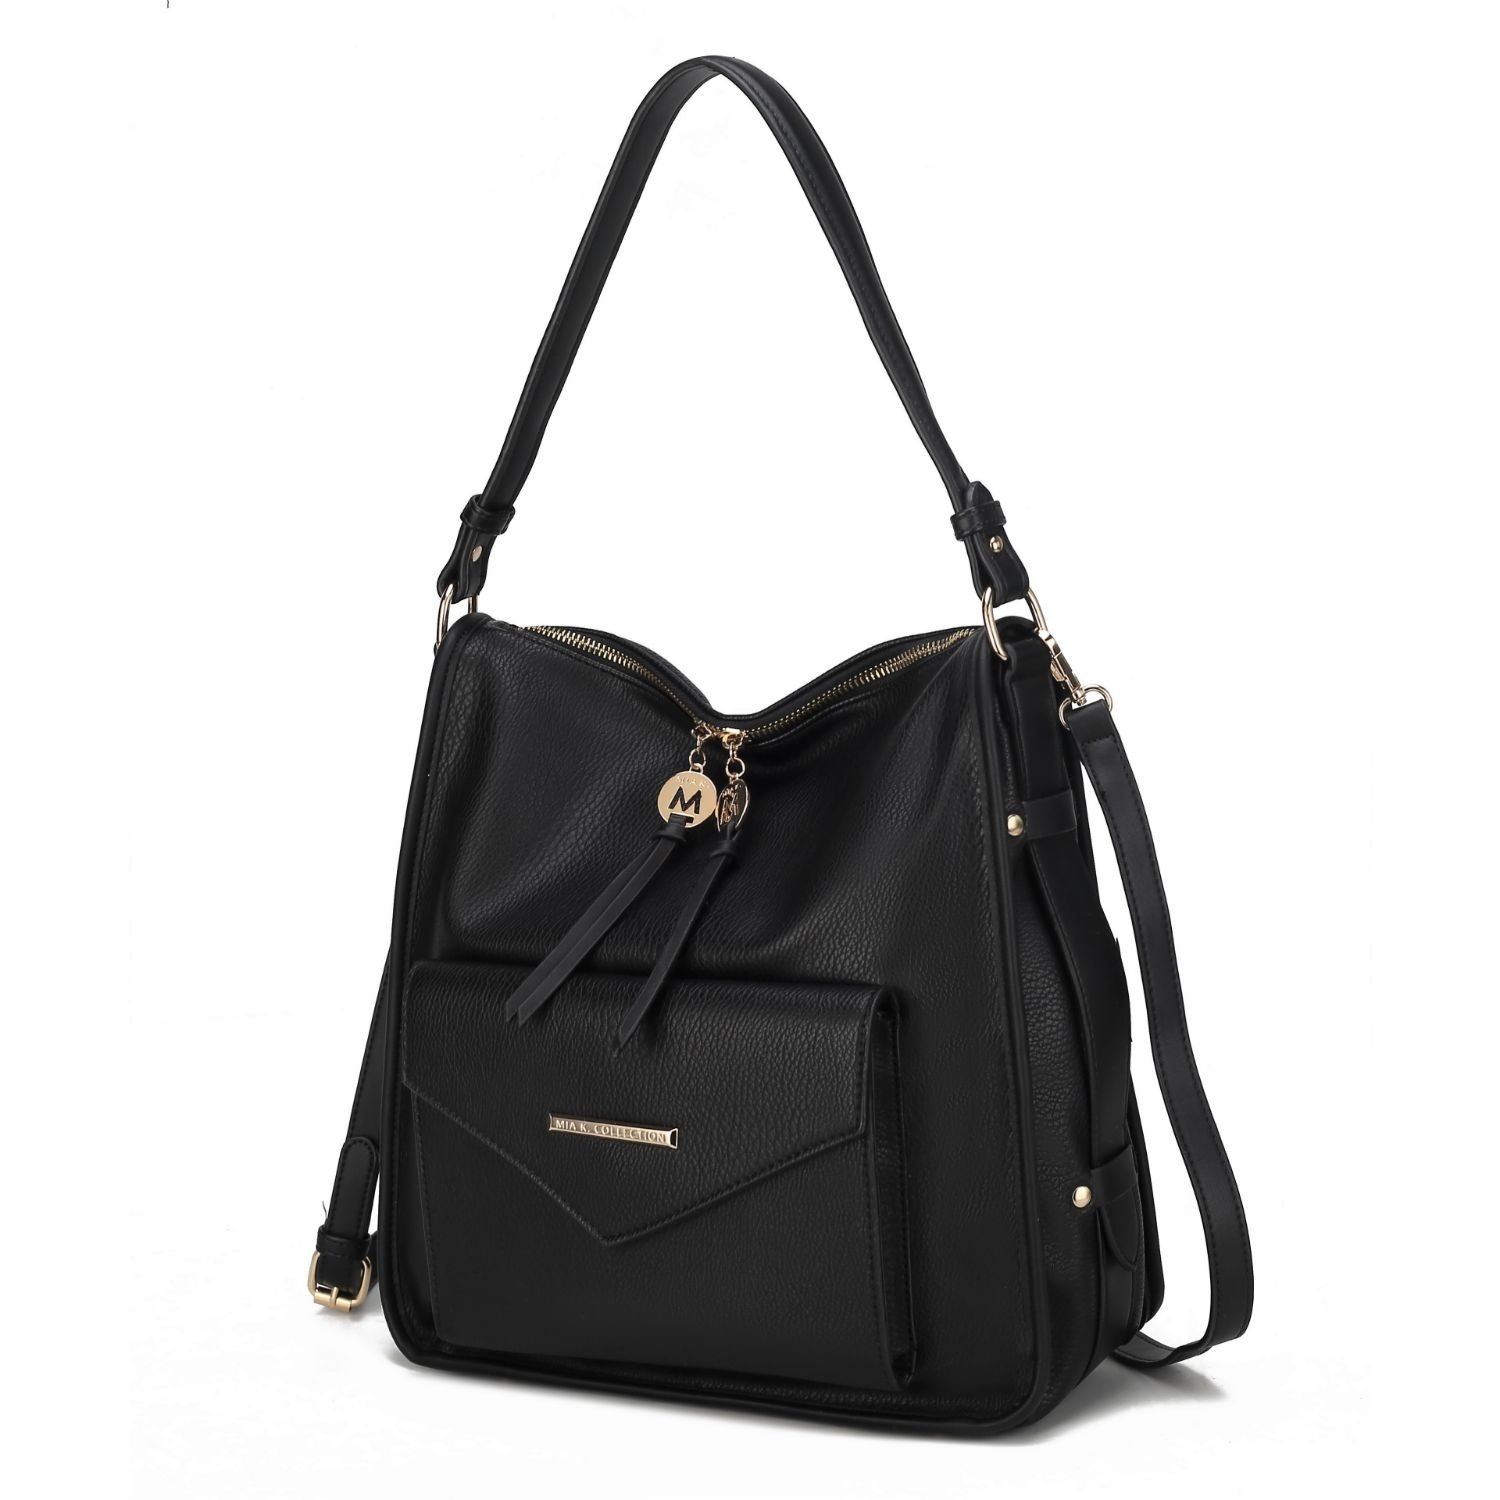 MKF Collection Vanya Shoulder Handbag By Mia K - Wine